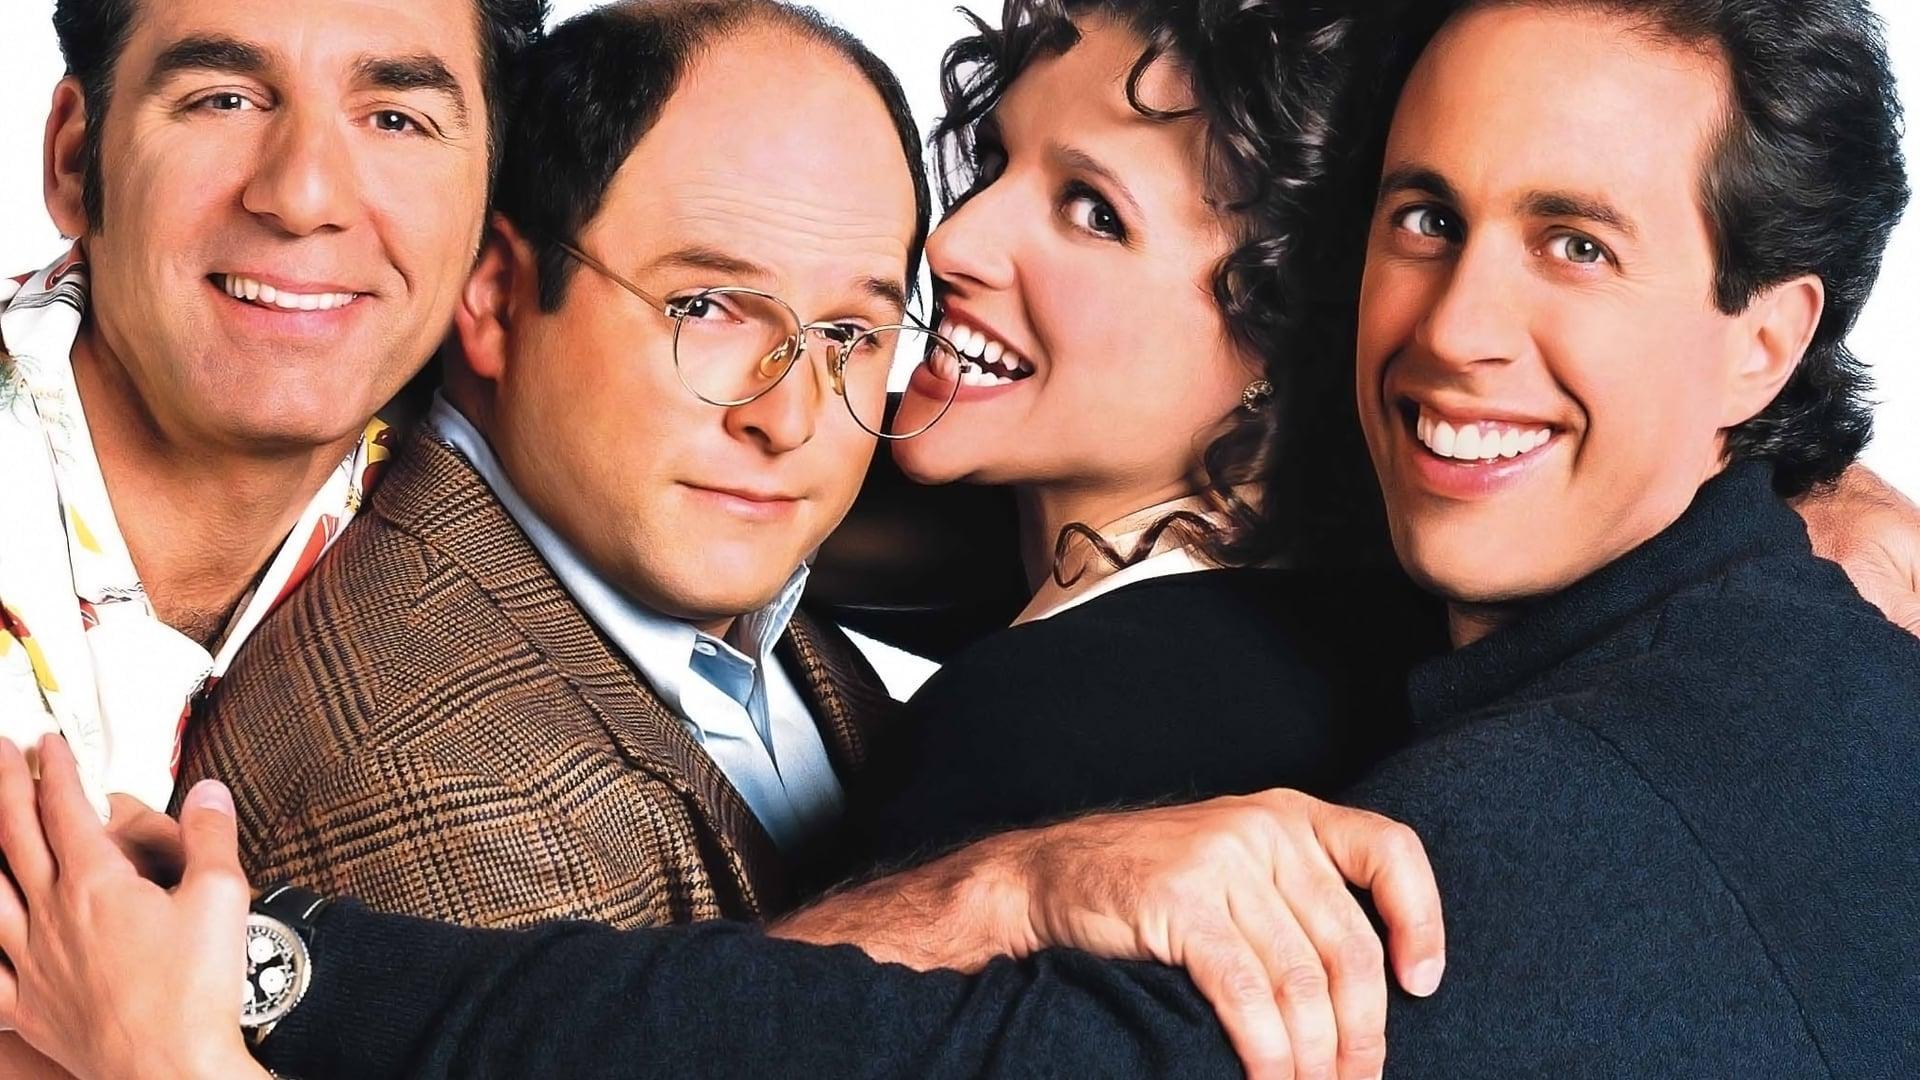 Seinfeld backdrop